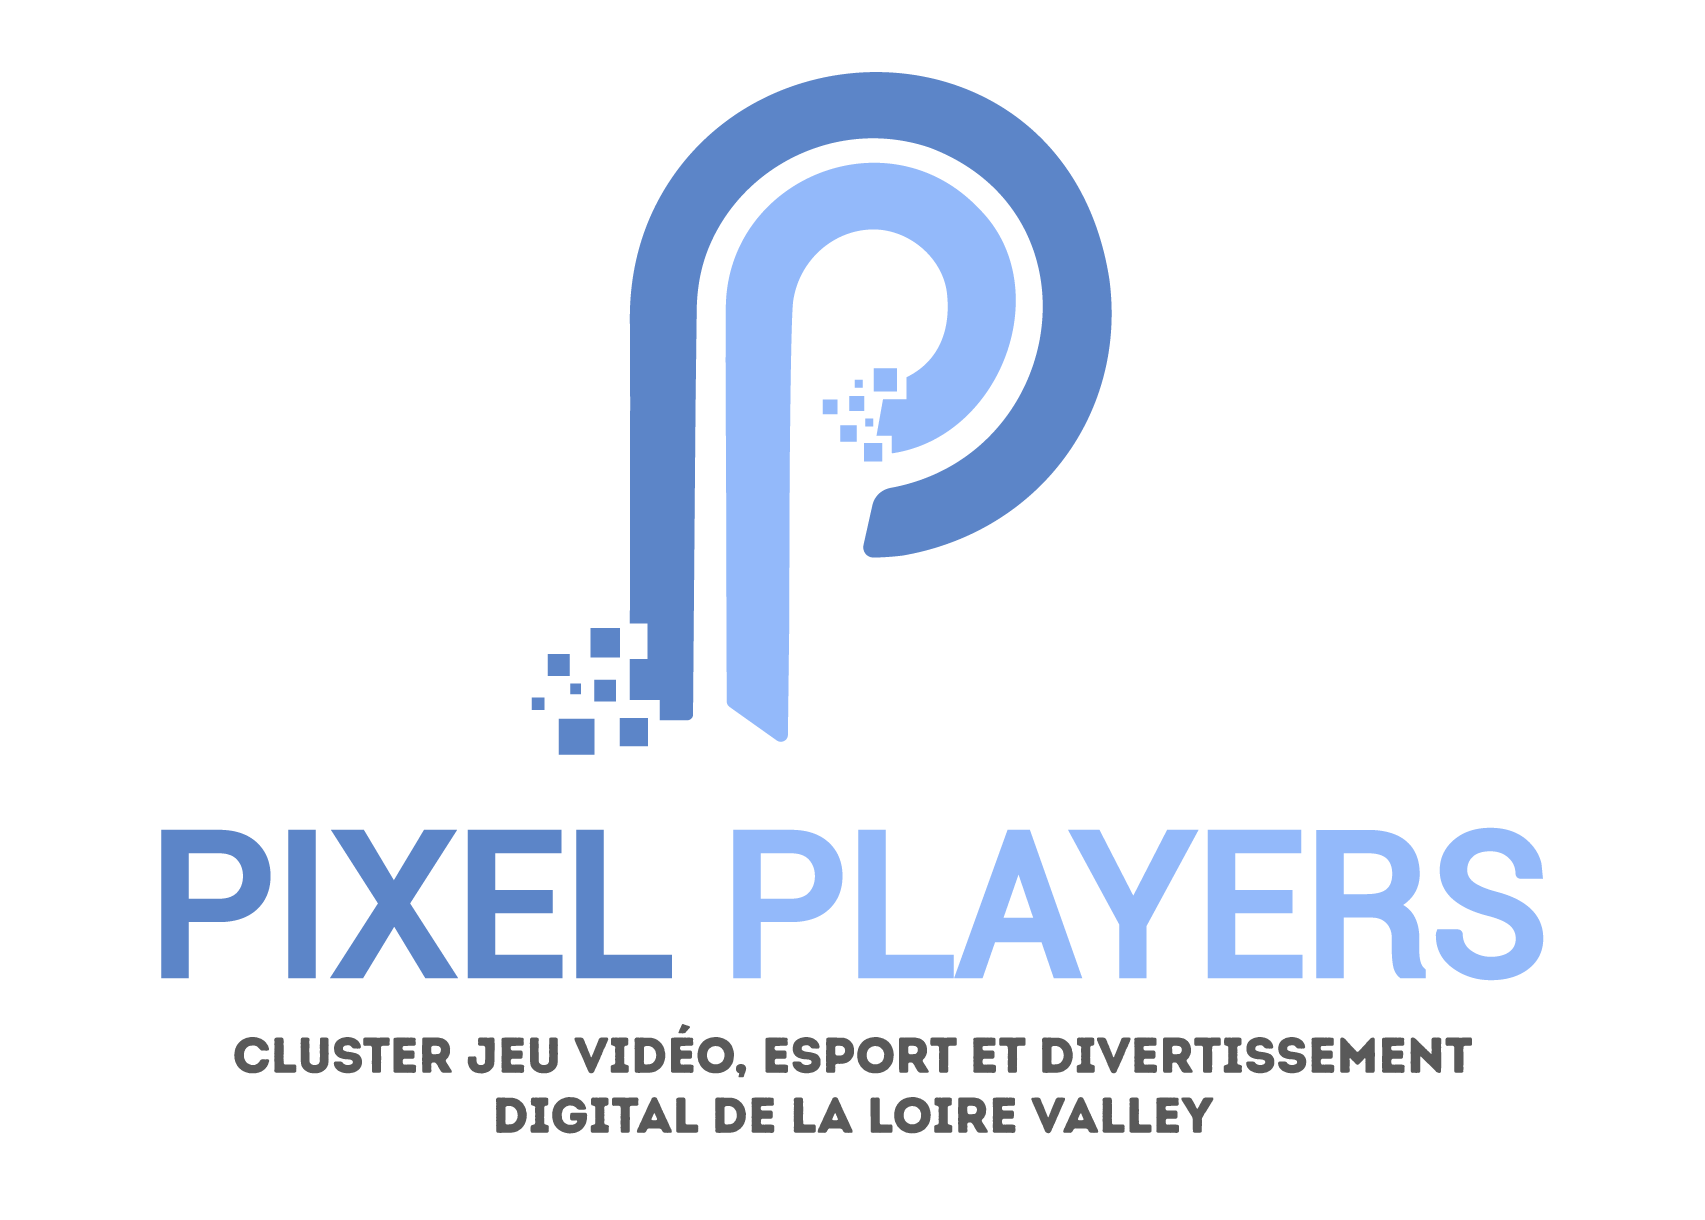 Pixel Players